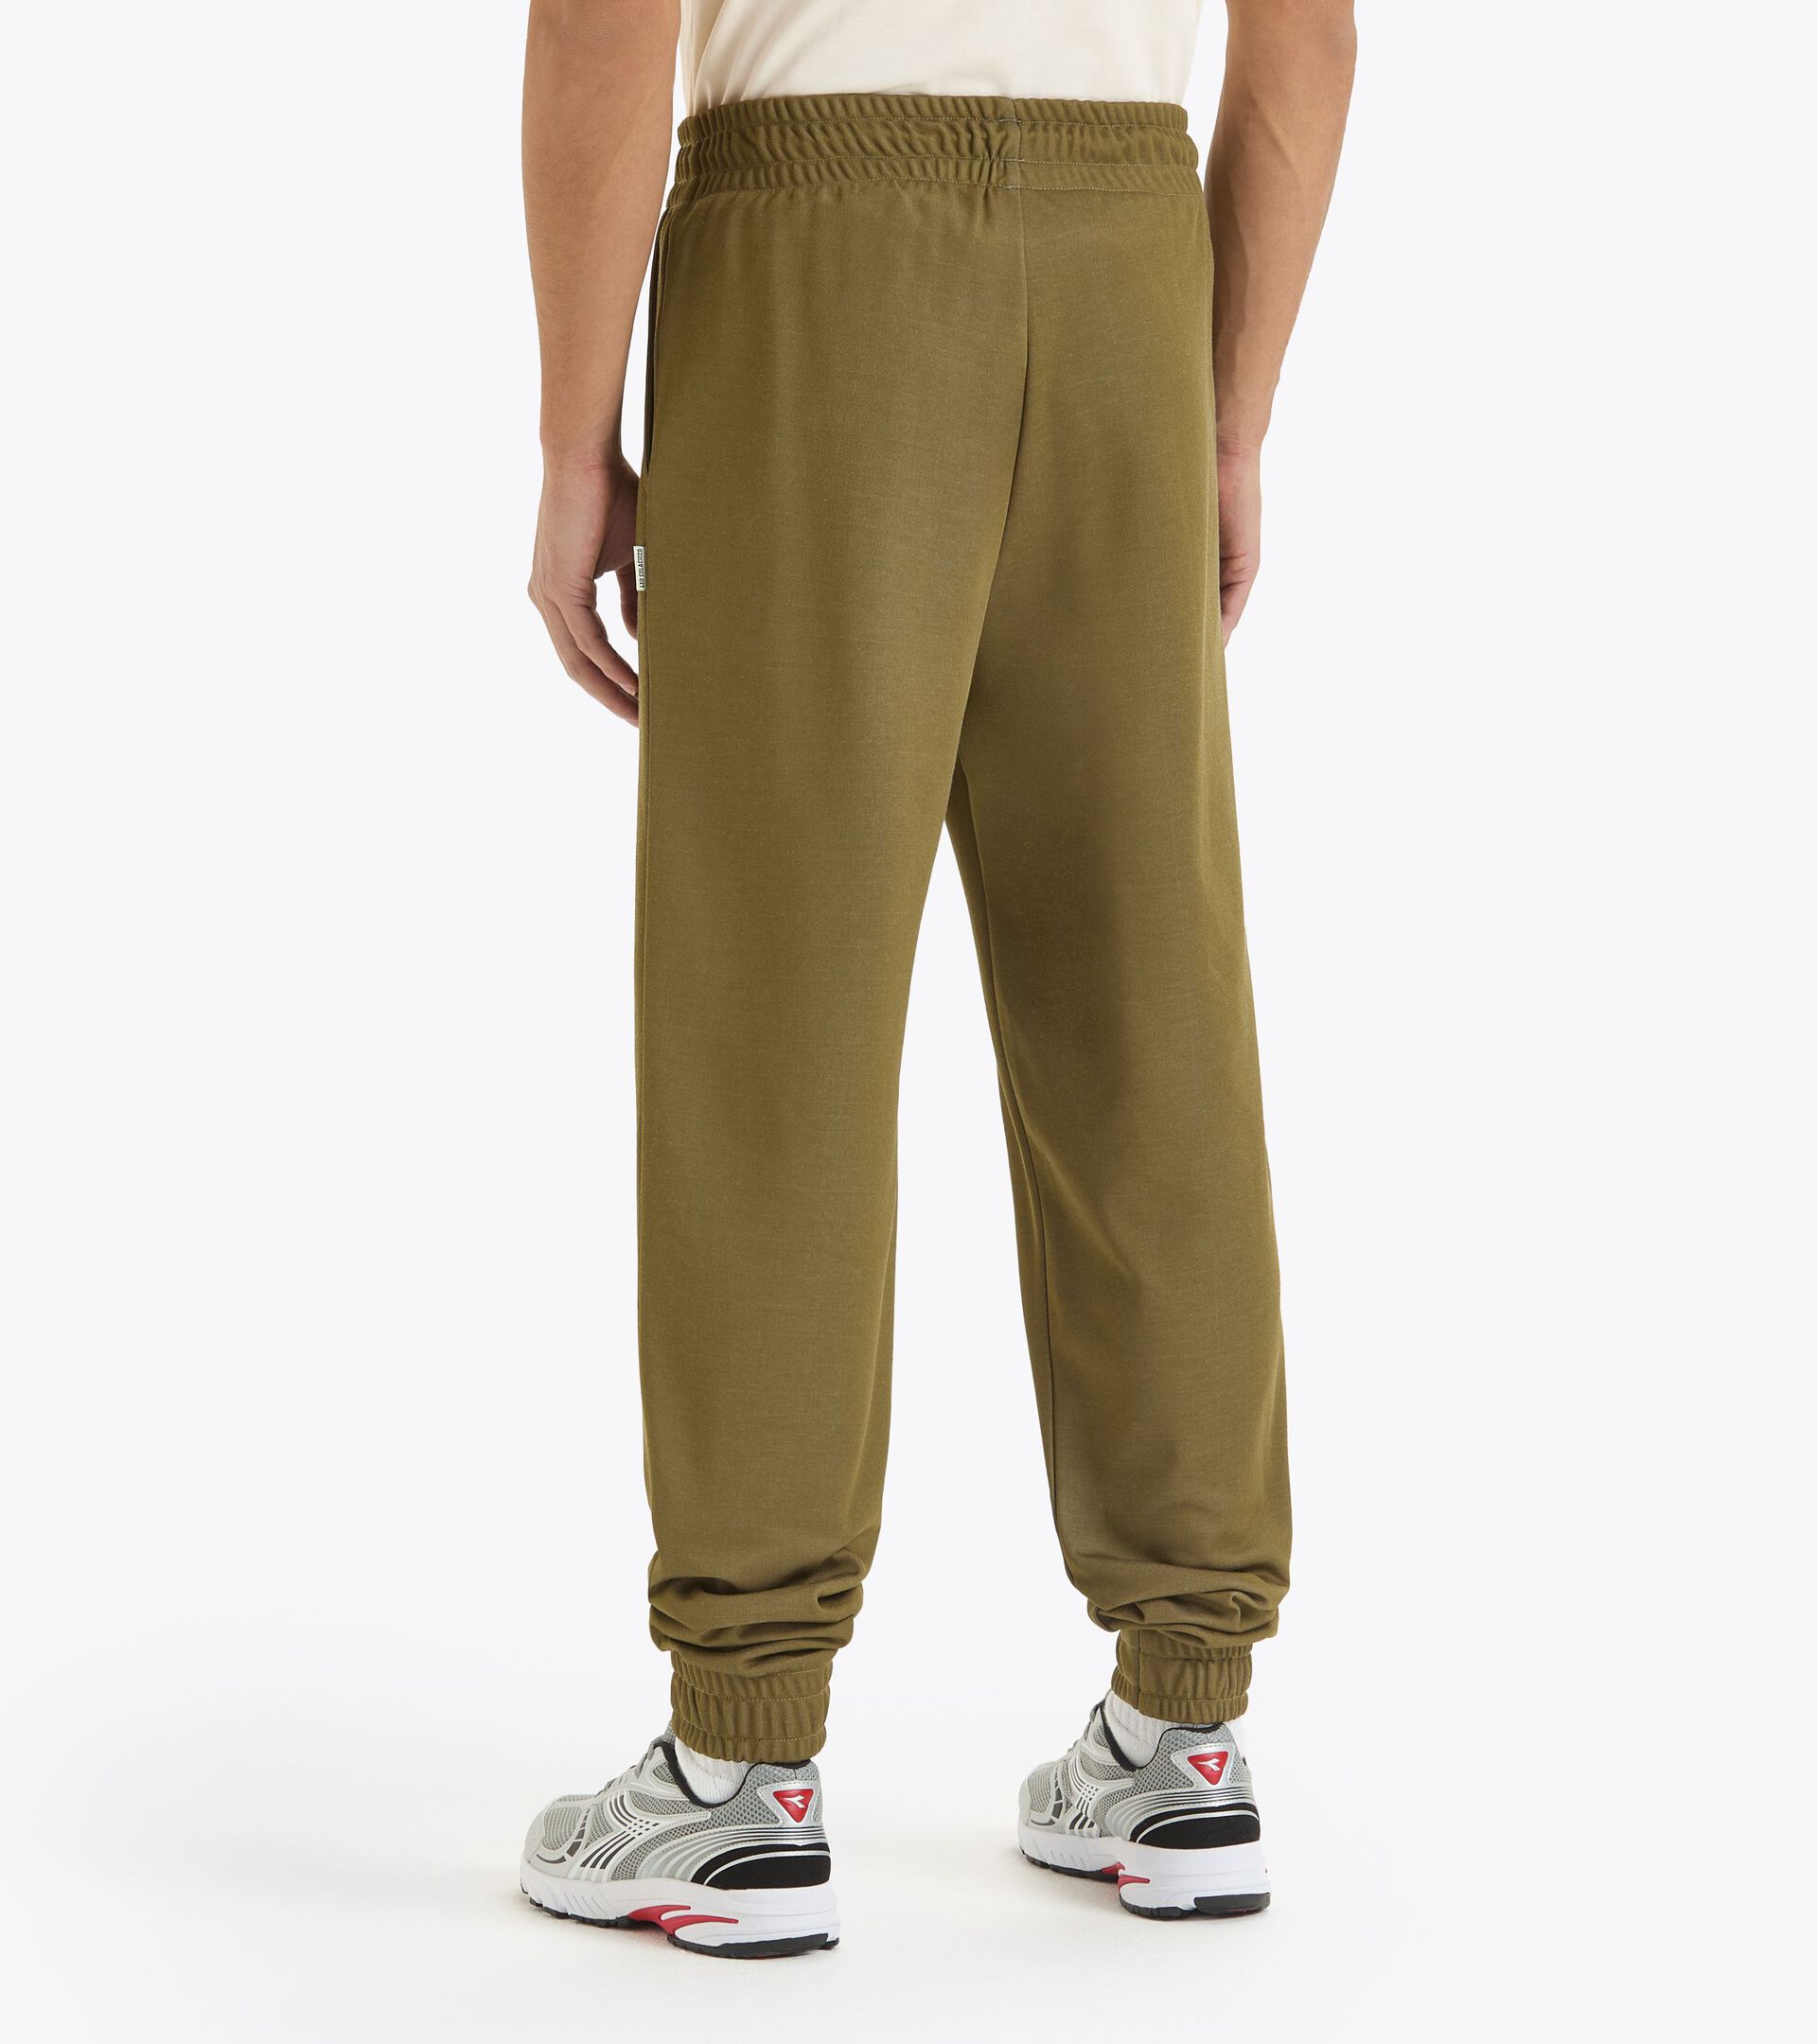 Pantalones deportivos - Gender neutral TRACK PANTS 80S OLIVA MILITAR - Diadora